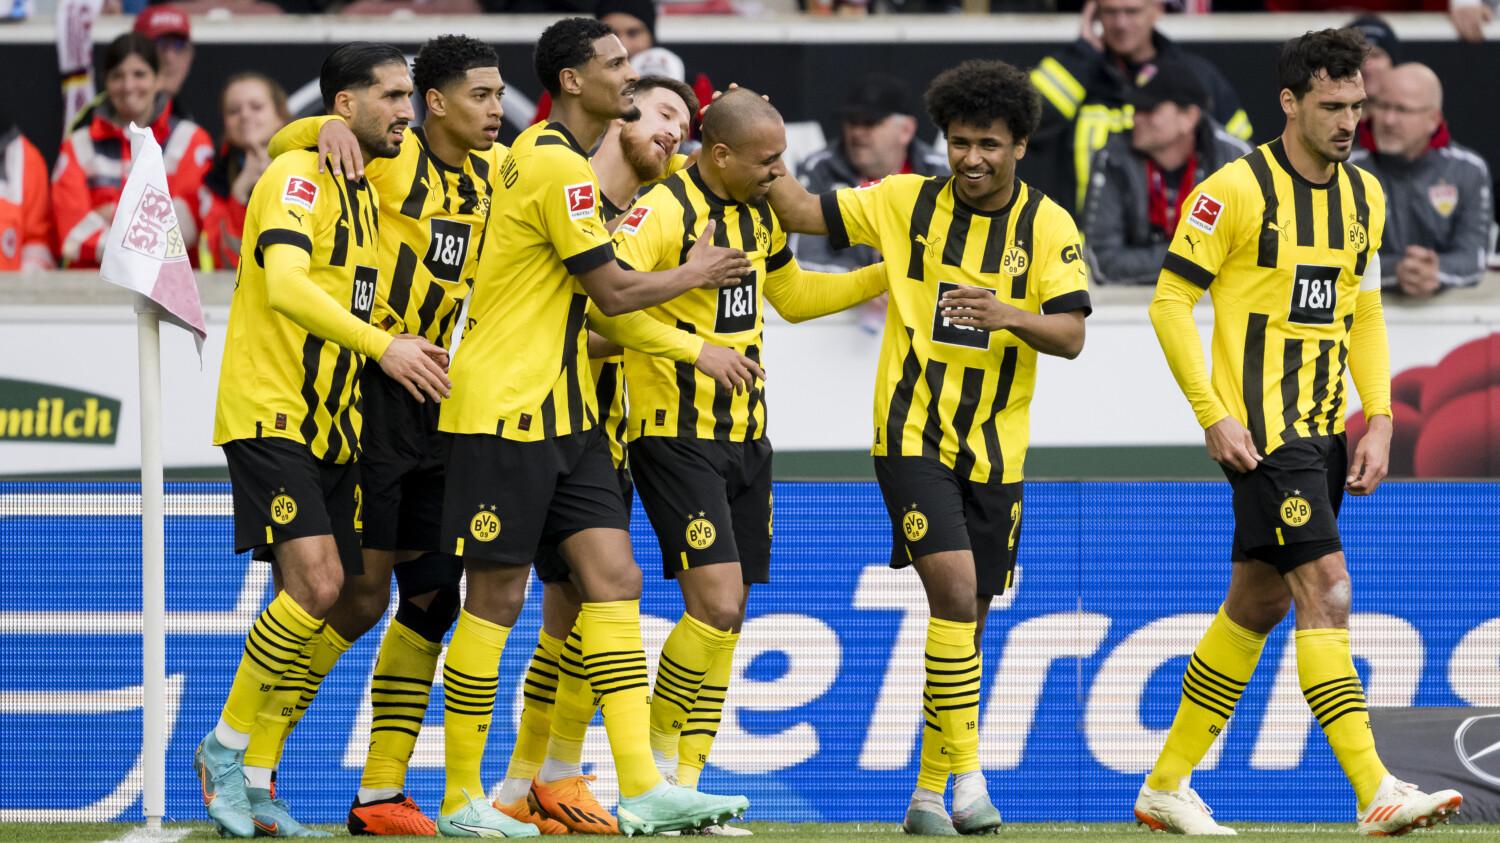 Borussia Dortmund: Building a Legacy through Youth Development